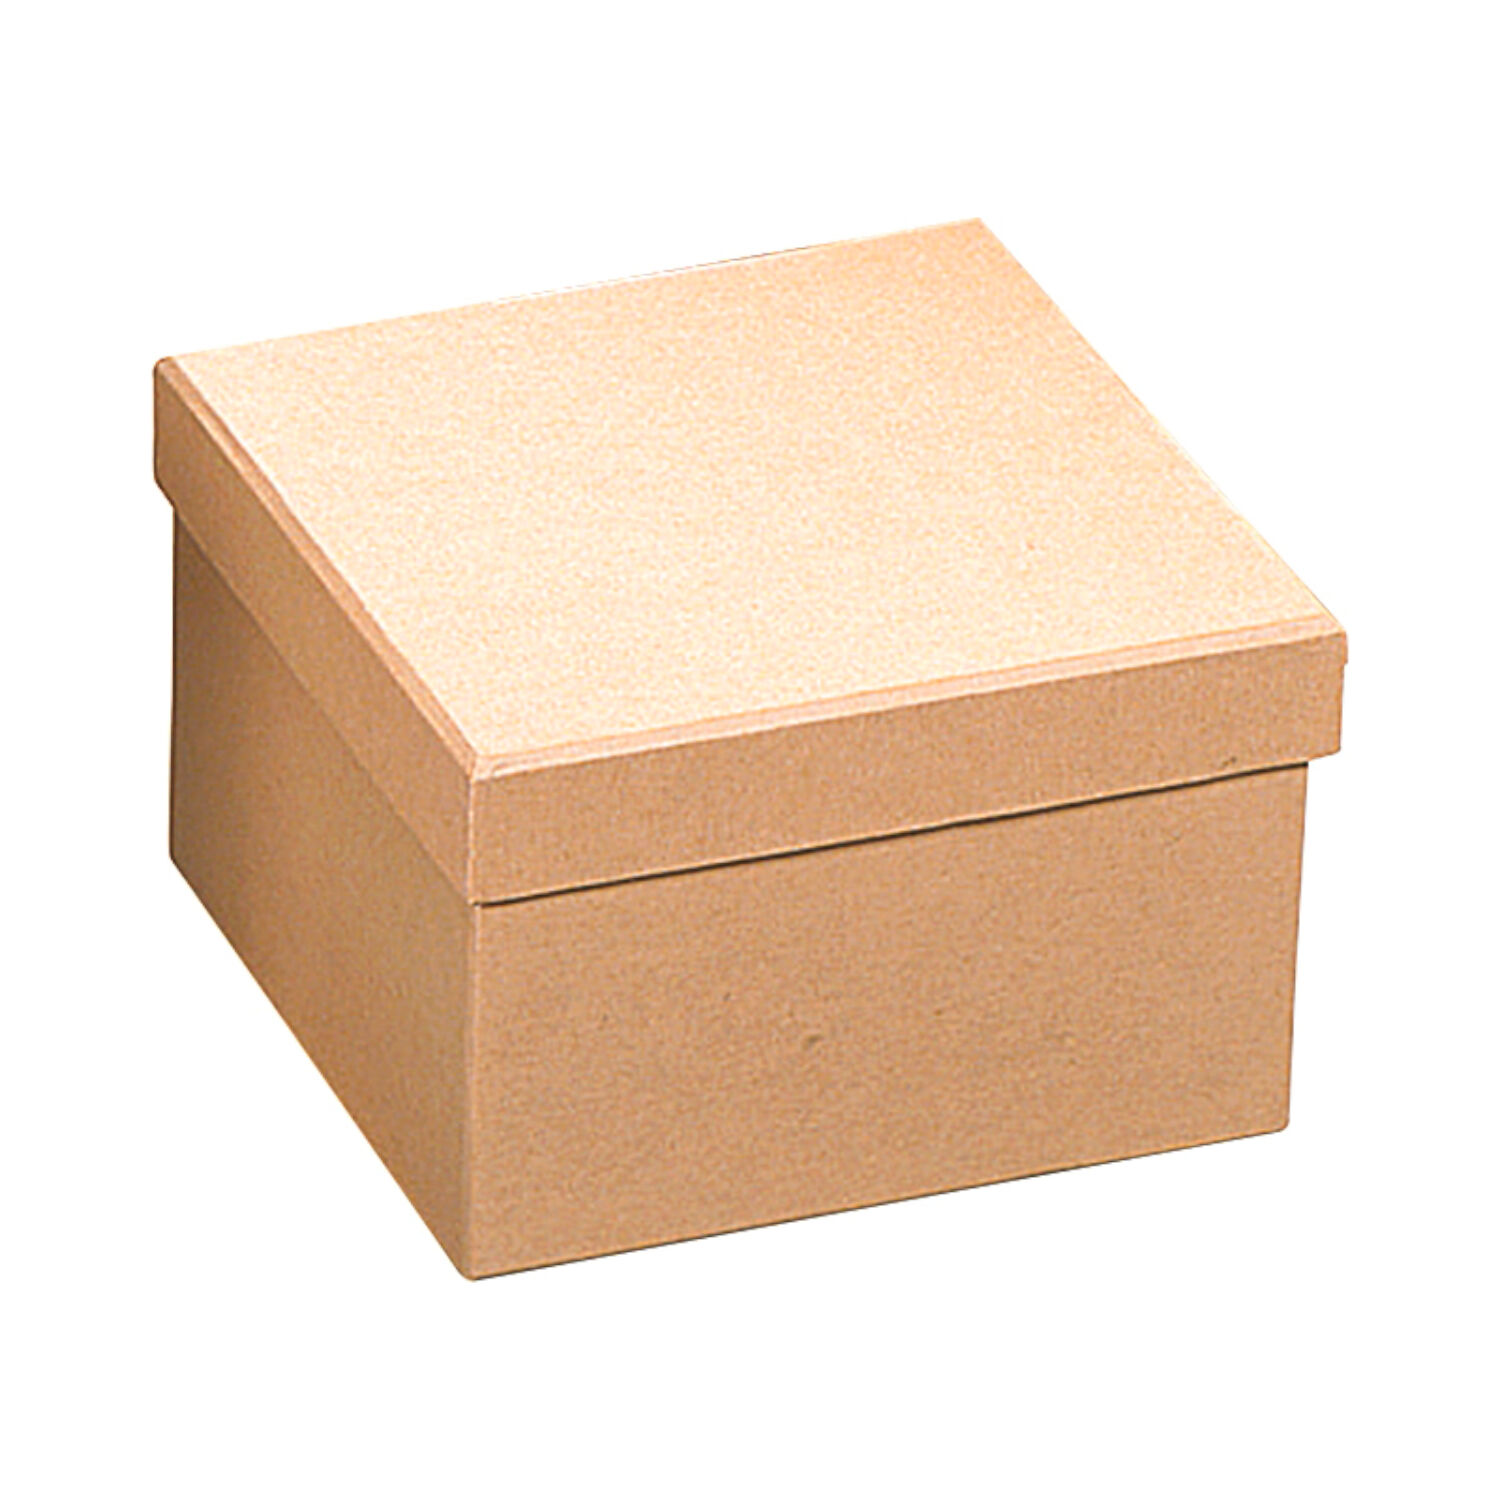 NEU Box Pappe natur, quadratisch mit Deckel, 13 x 13 x 8,5 cm